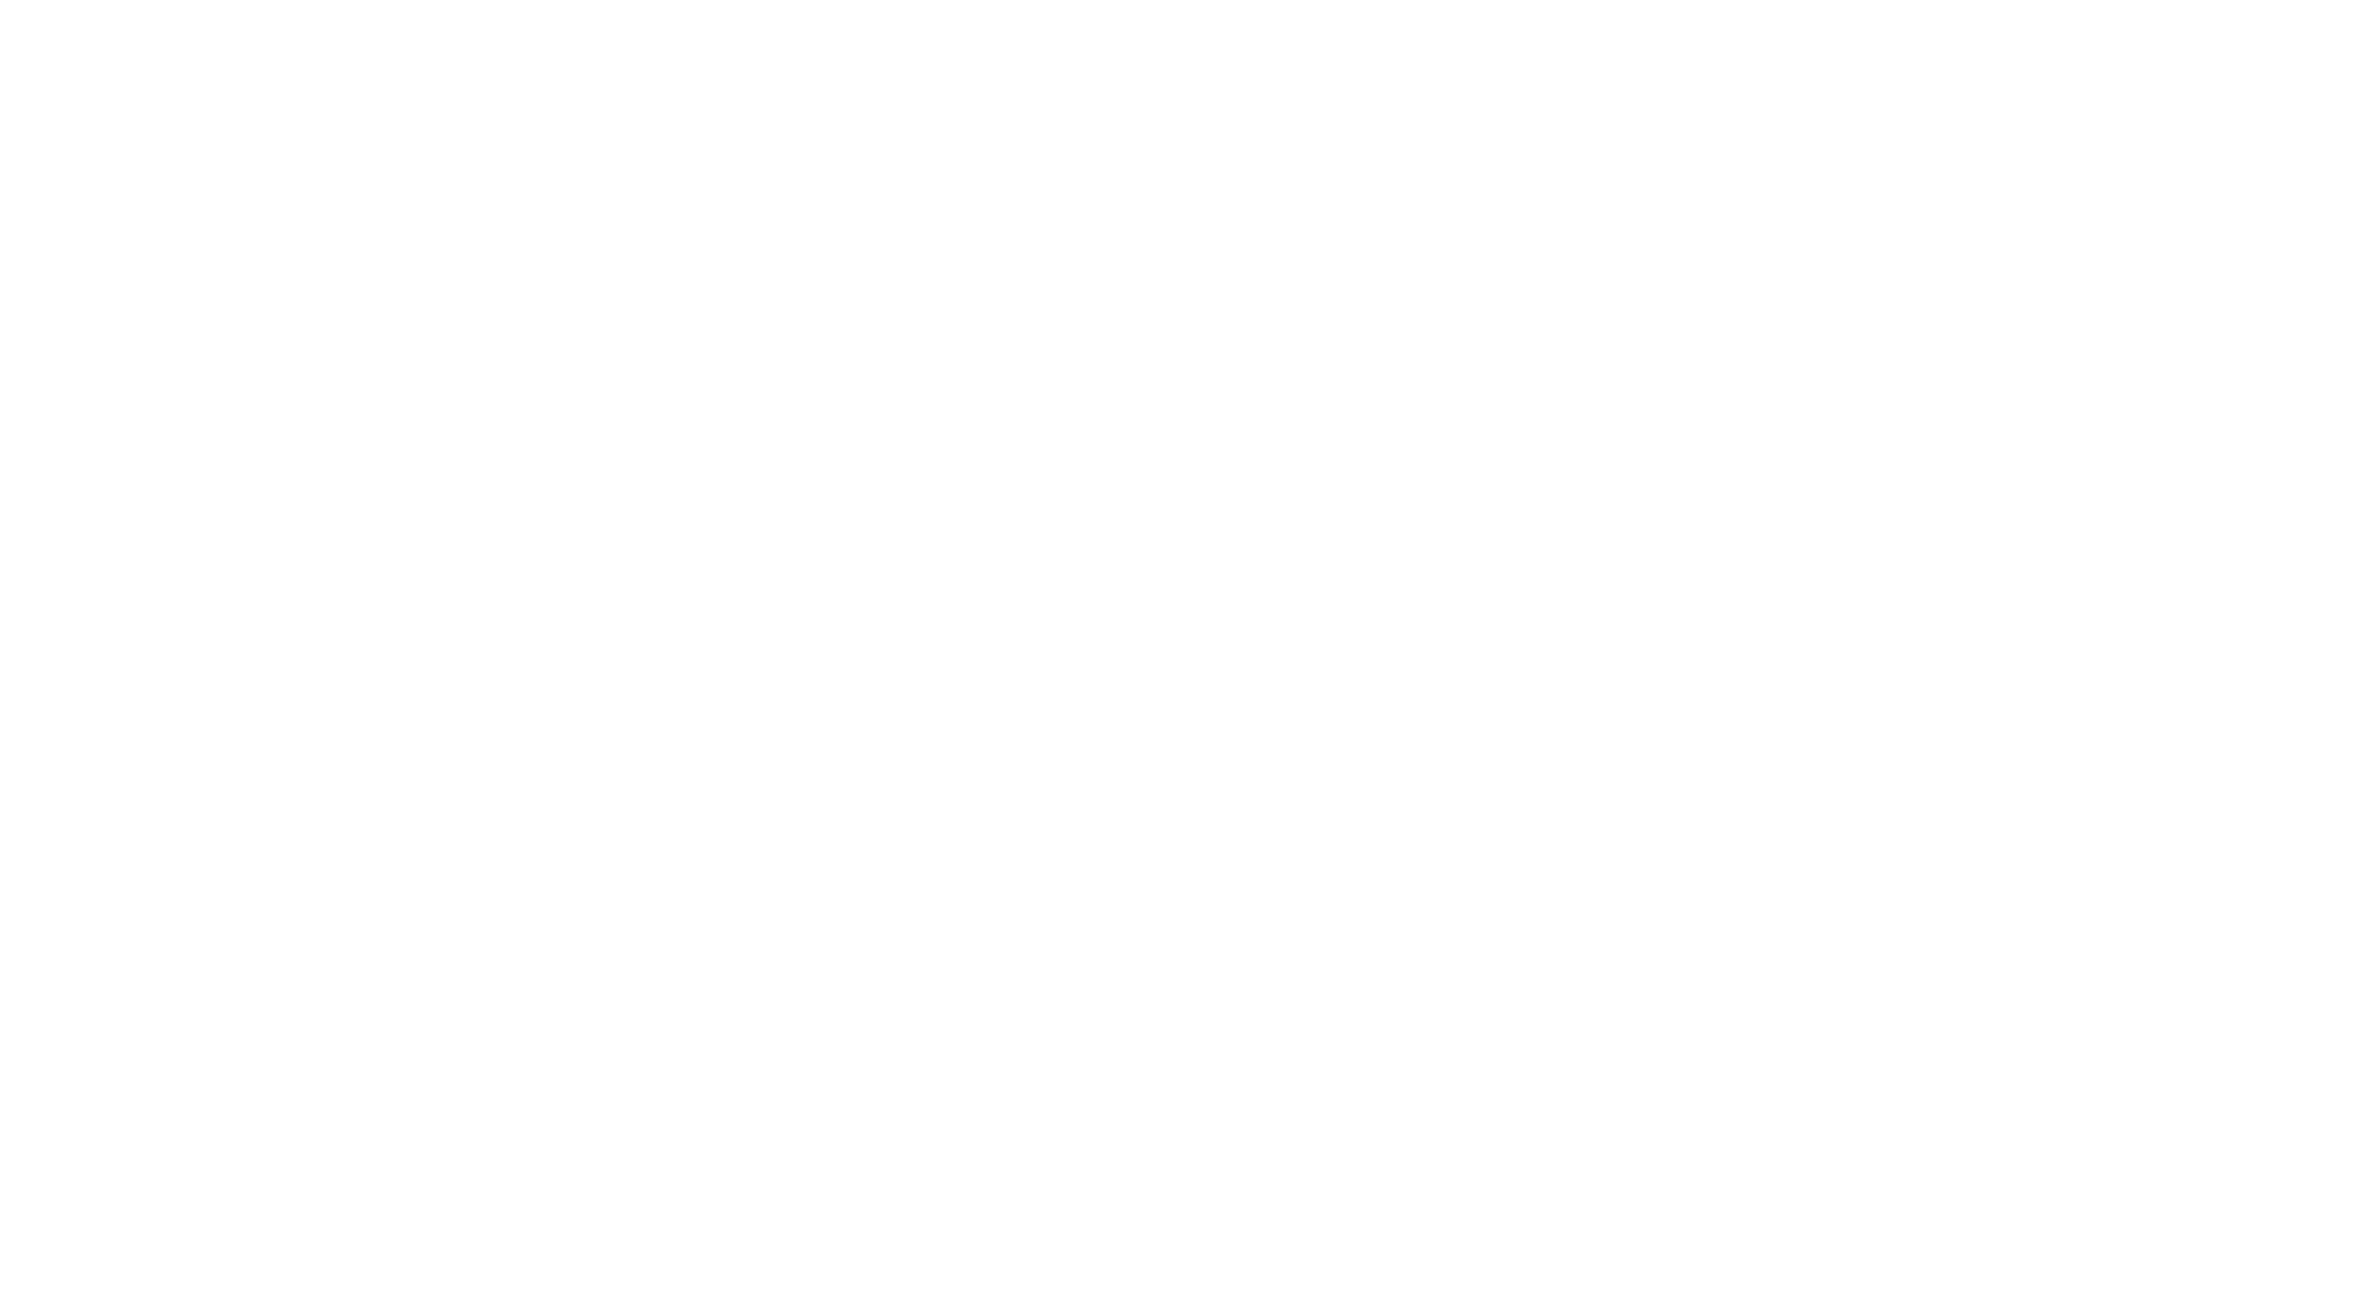 Lefort_Logo blanco-01